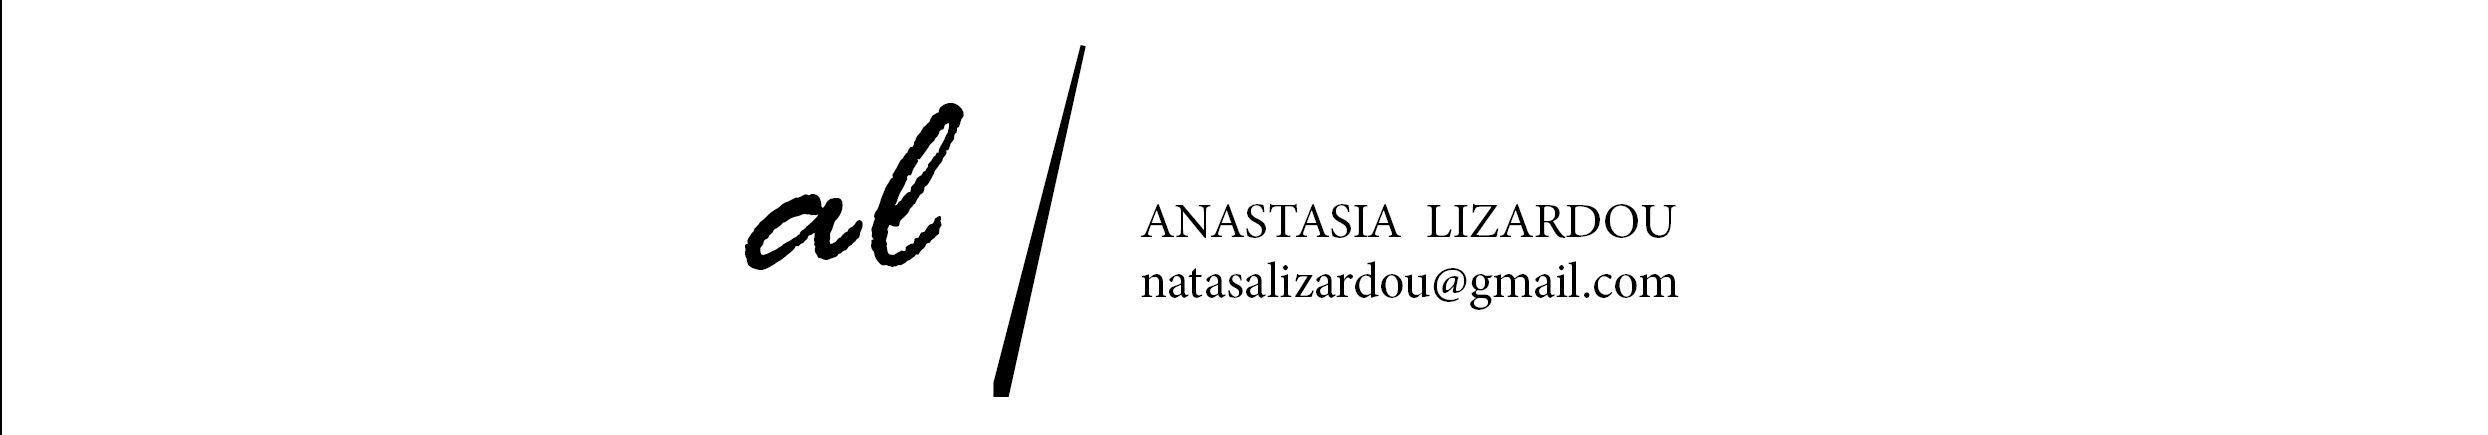 Anastasia Lizardou's profile banner